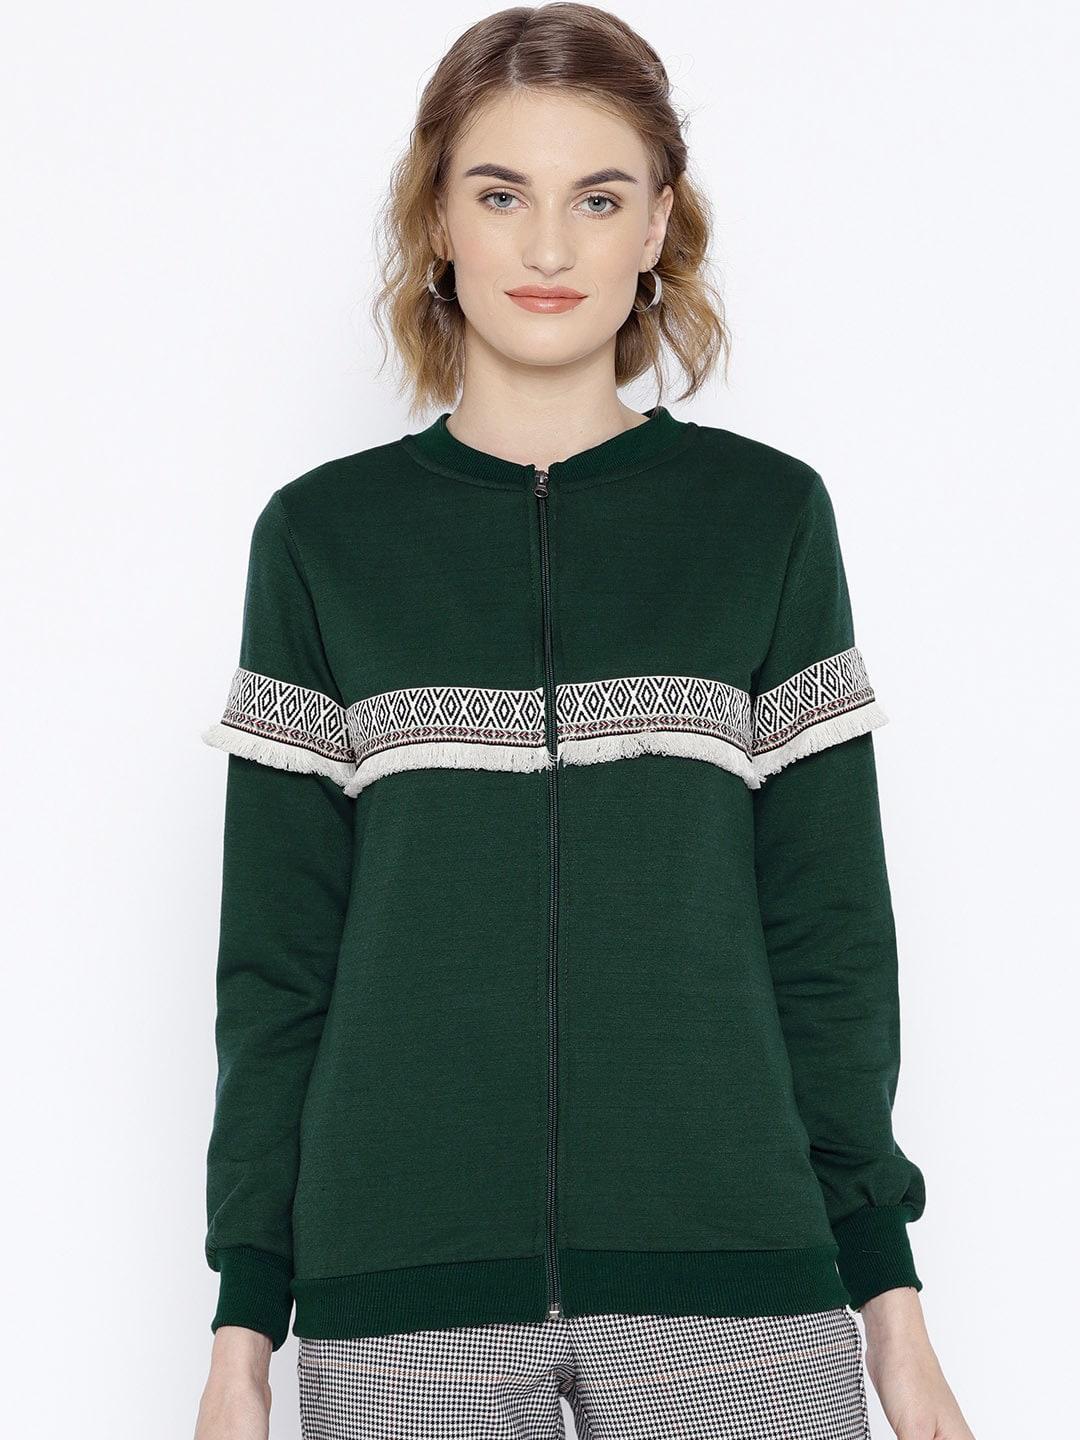 baesd-women-teal-sweatshirt